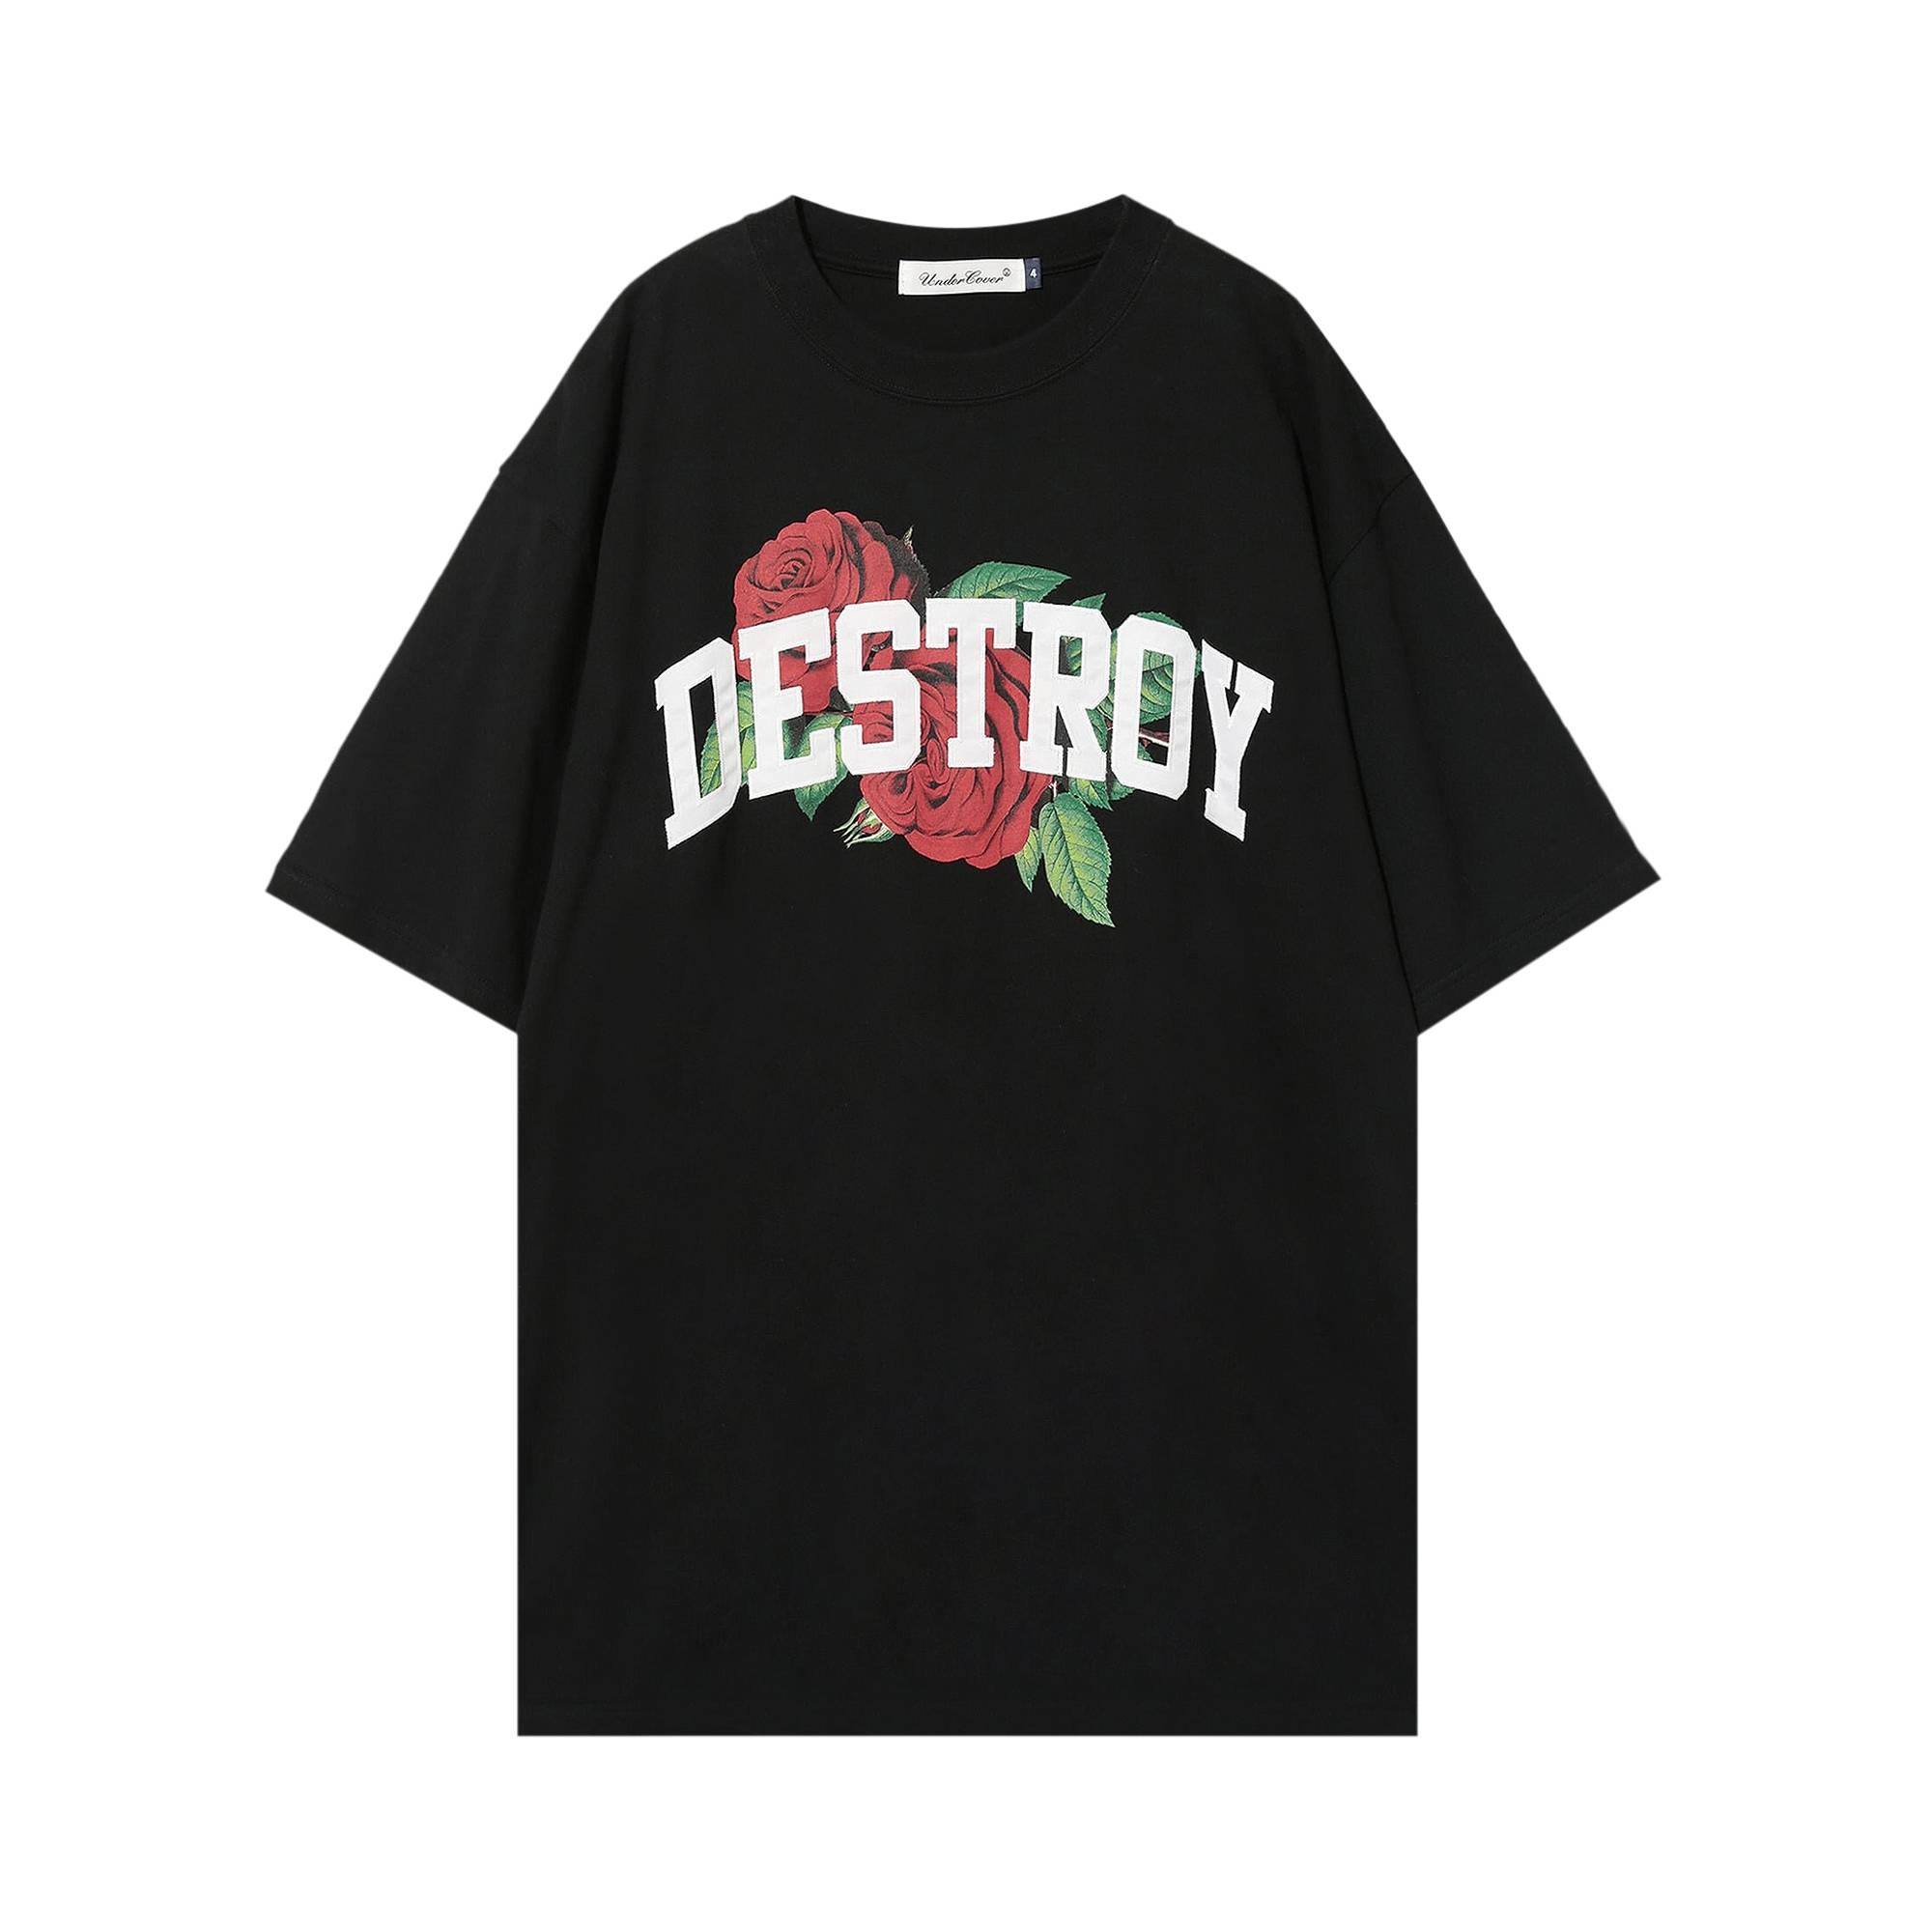 Undercover Destroy T-Shirt 'Black' - 1